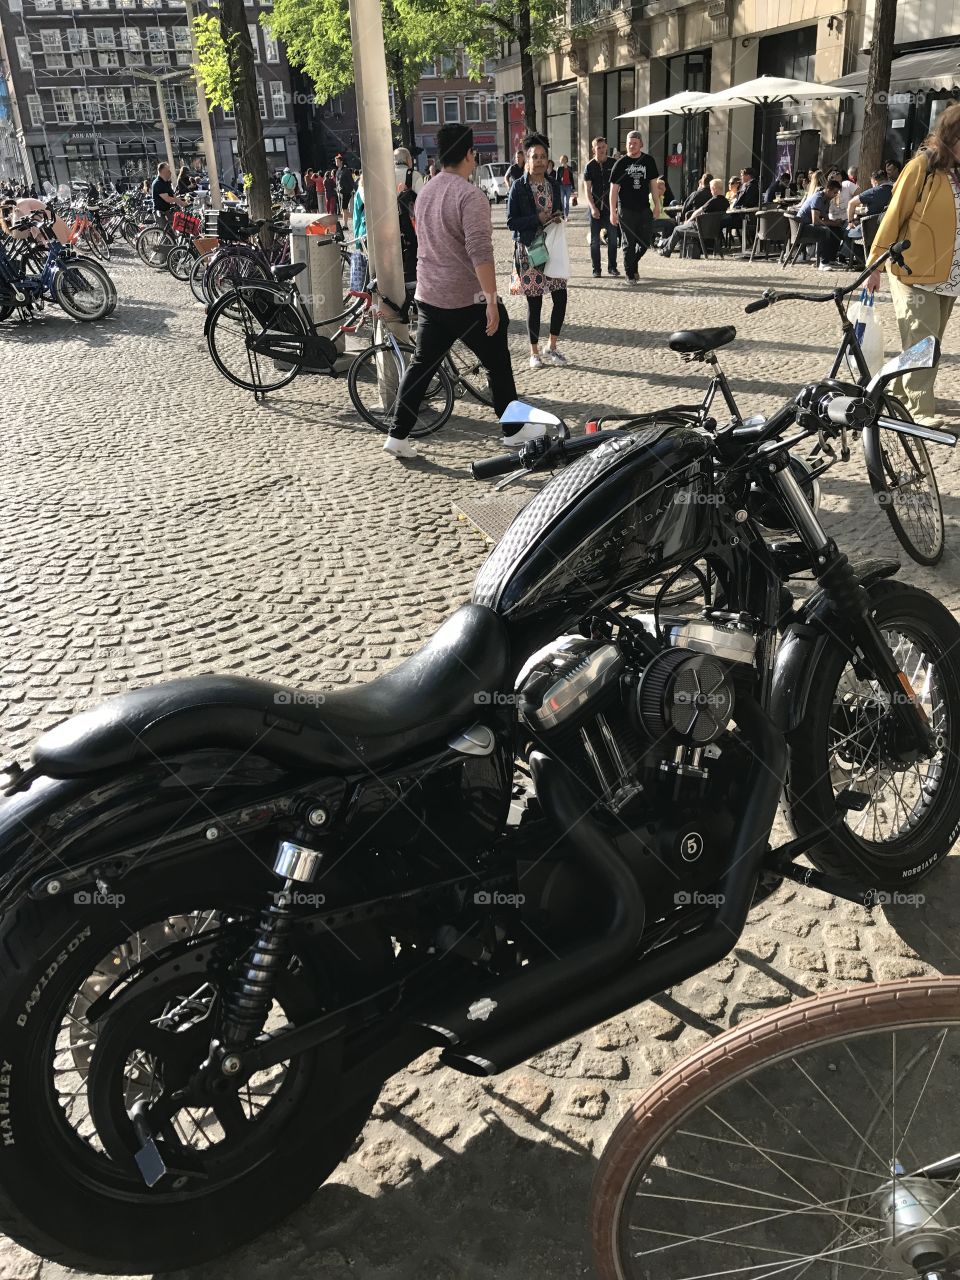 Harley 
Harley Davidson
Motor Cycle
Bike
Netherlands 
Amsterdam 
